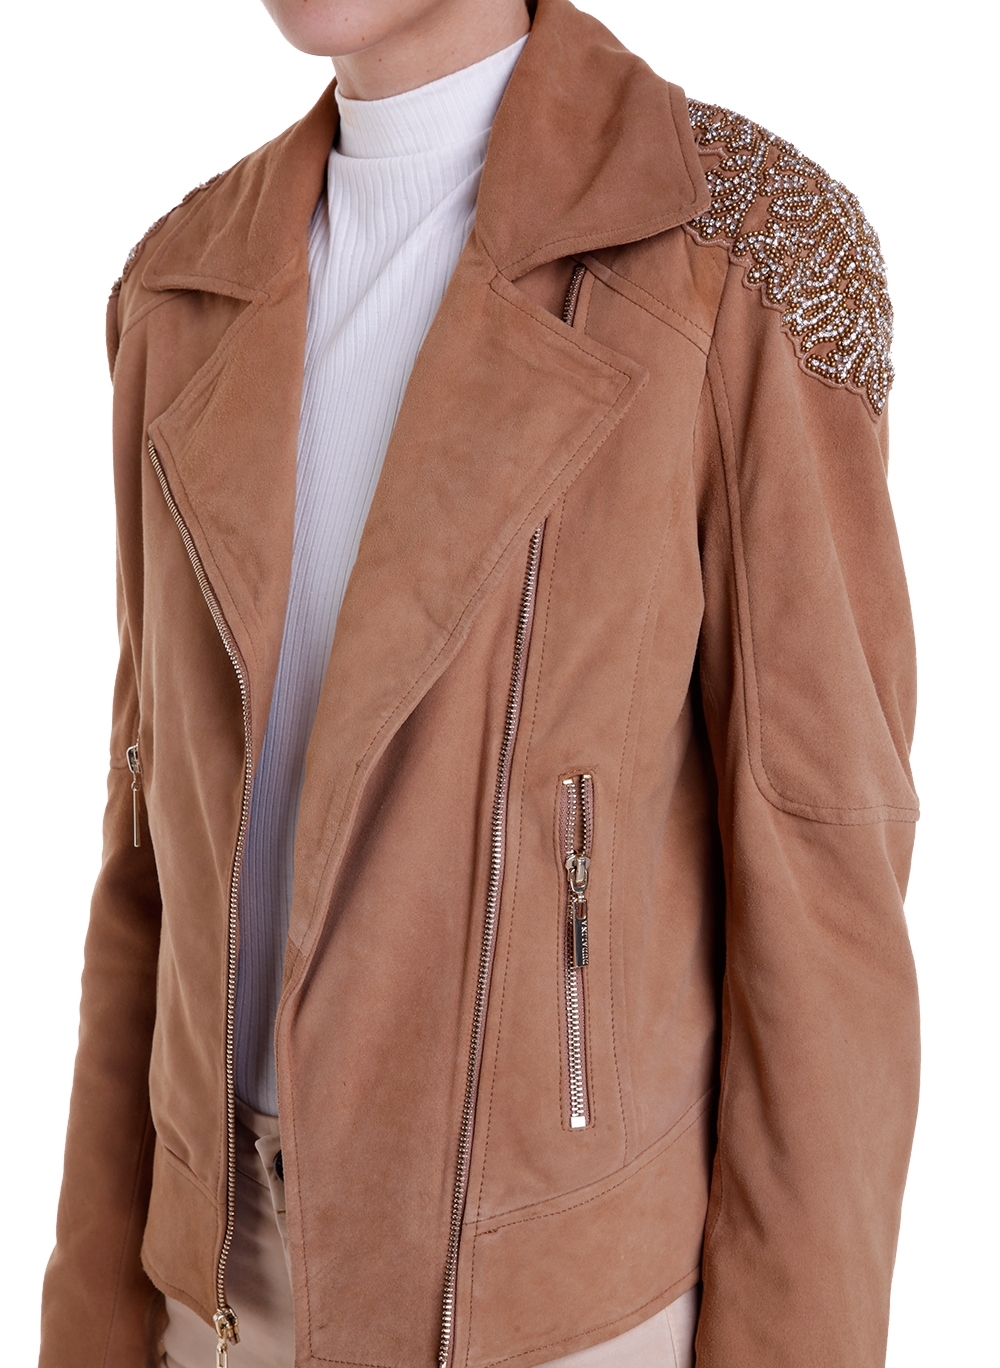 jaqueta de couro feminina bordada